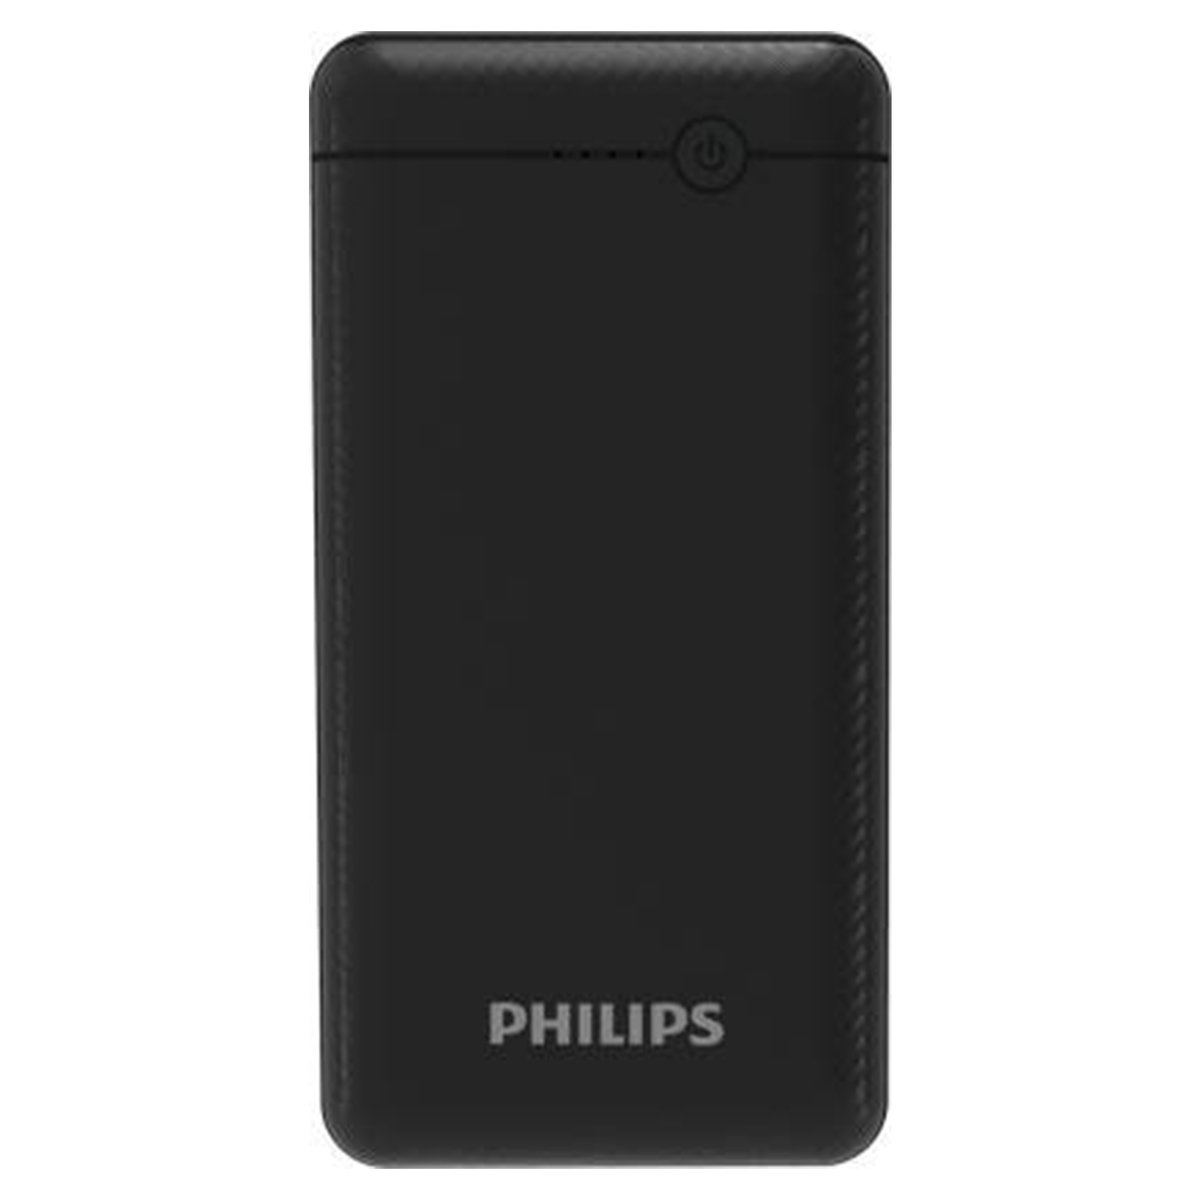 Philips Power Bank 20000mAh DLP1720CB Black